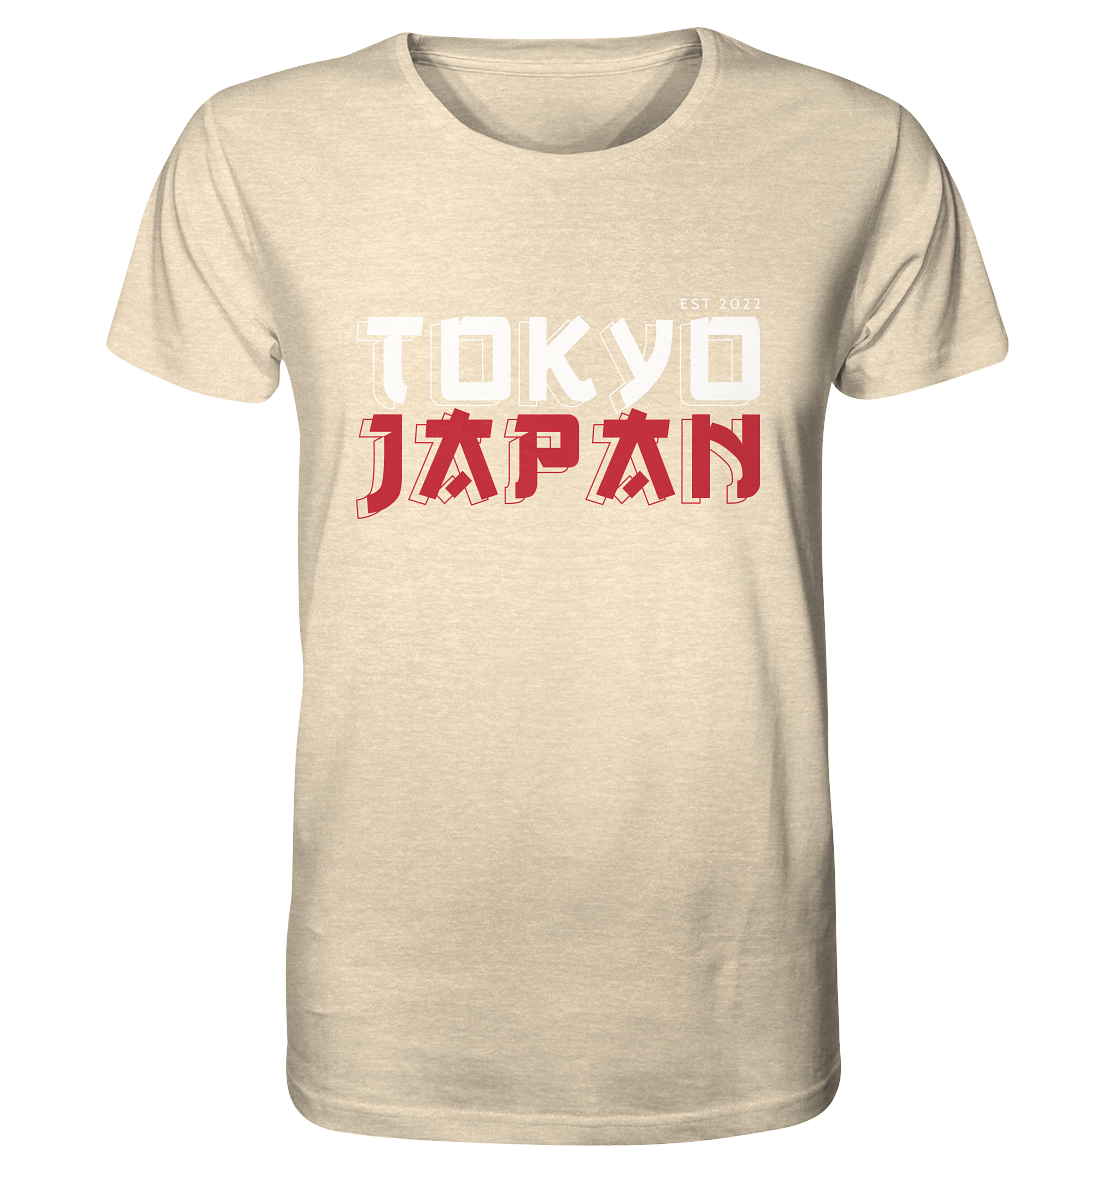 Tokyo Japan - Organic Shirt